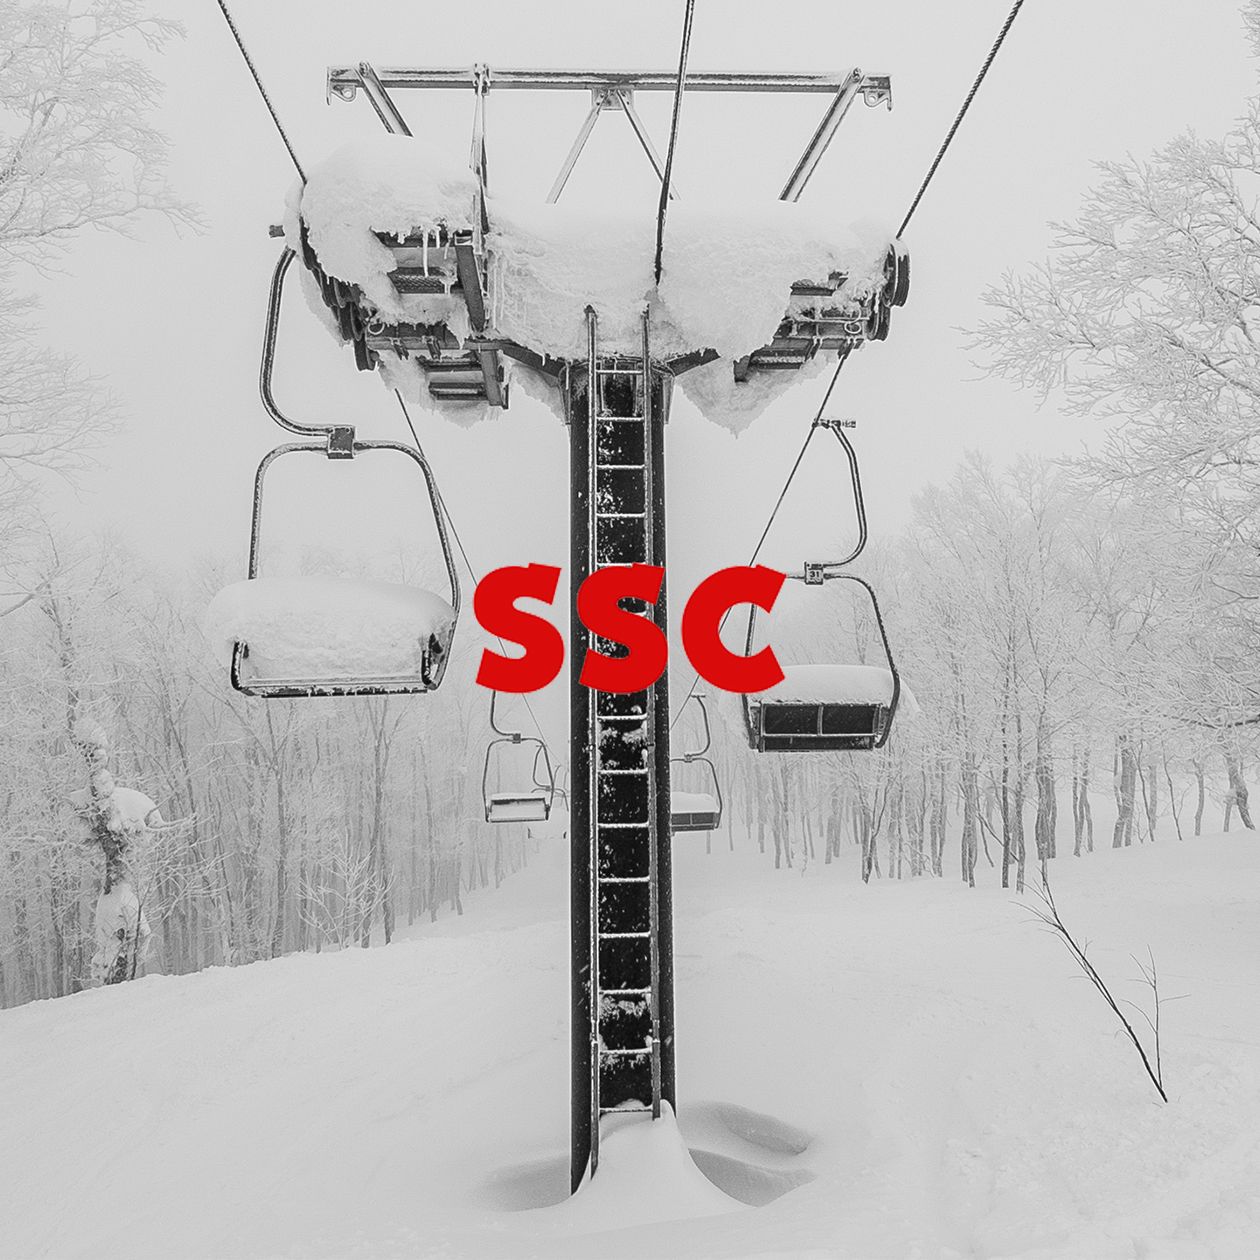 Soho Ski Club - About